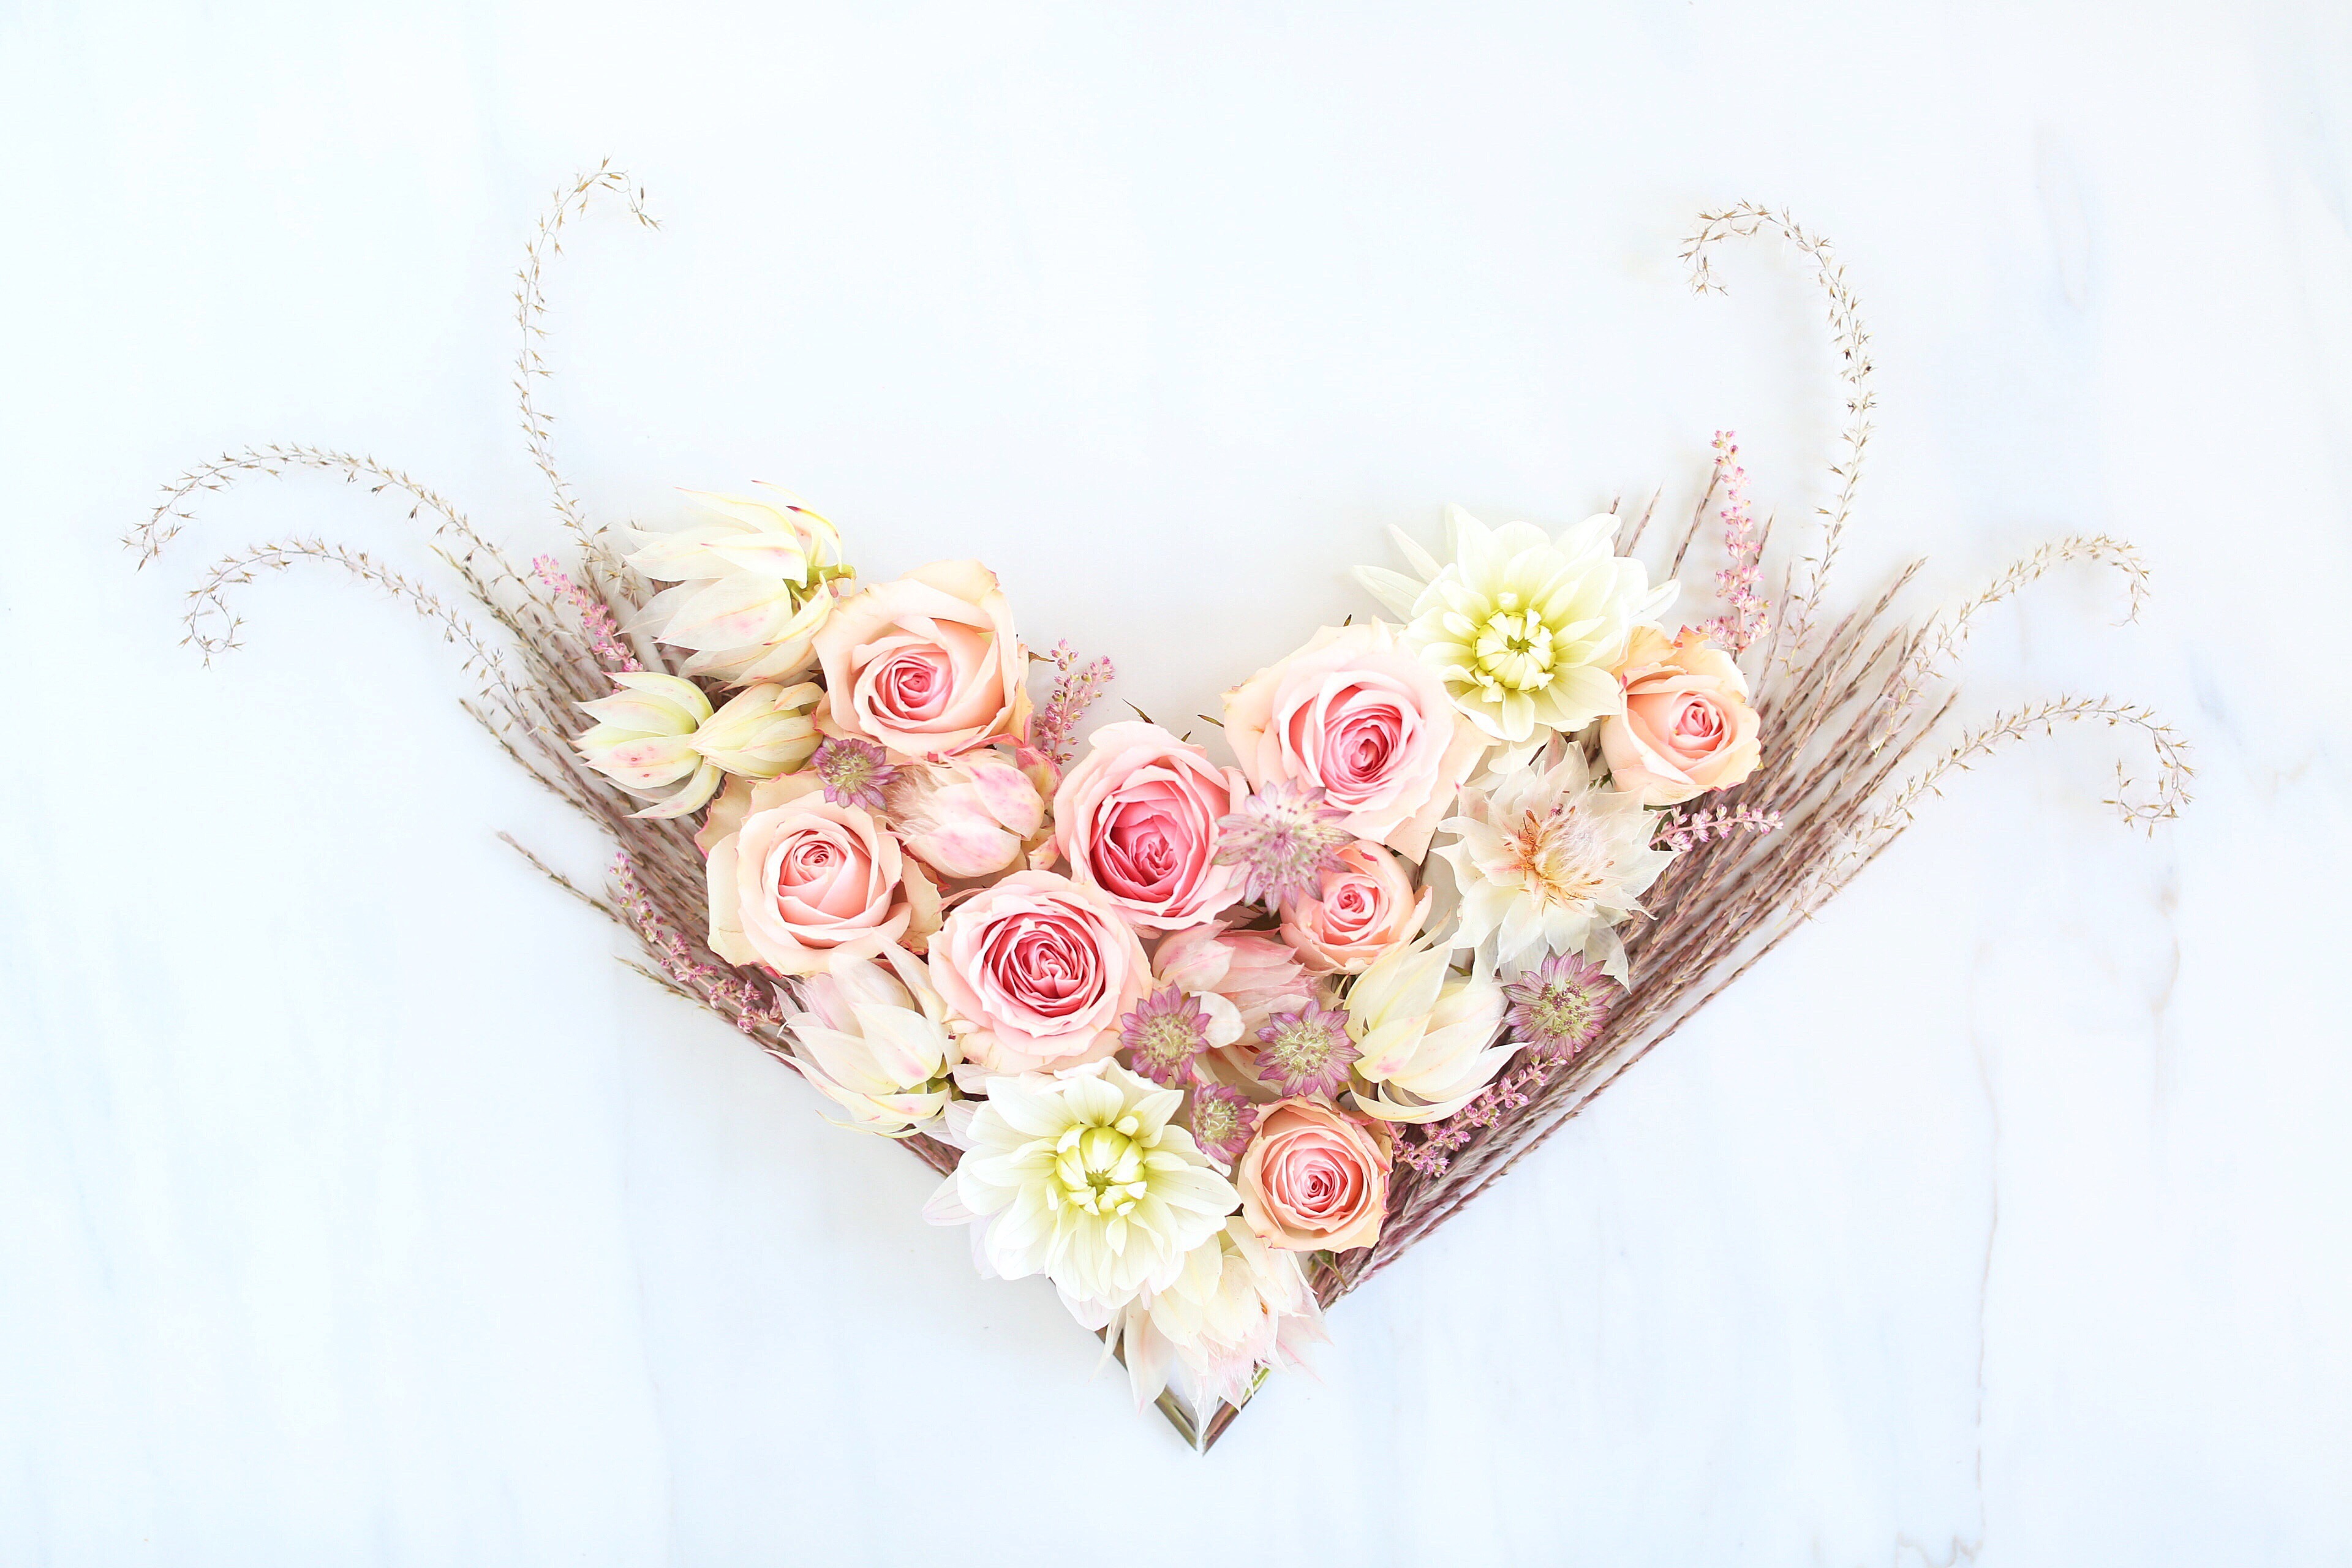 DIGITAL BLOOMS FEBRUARY 2018 | Free Blush Heart Floral Desktop Wallpapers for Valentine’s Day | Design 1 // JustineCelina.com x Rebecca Dawn Design